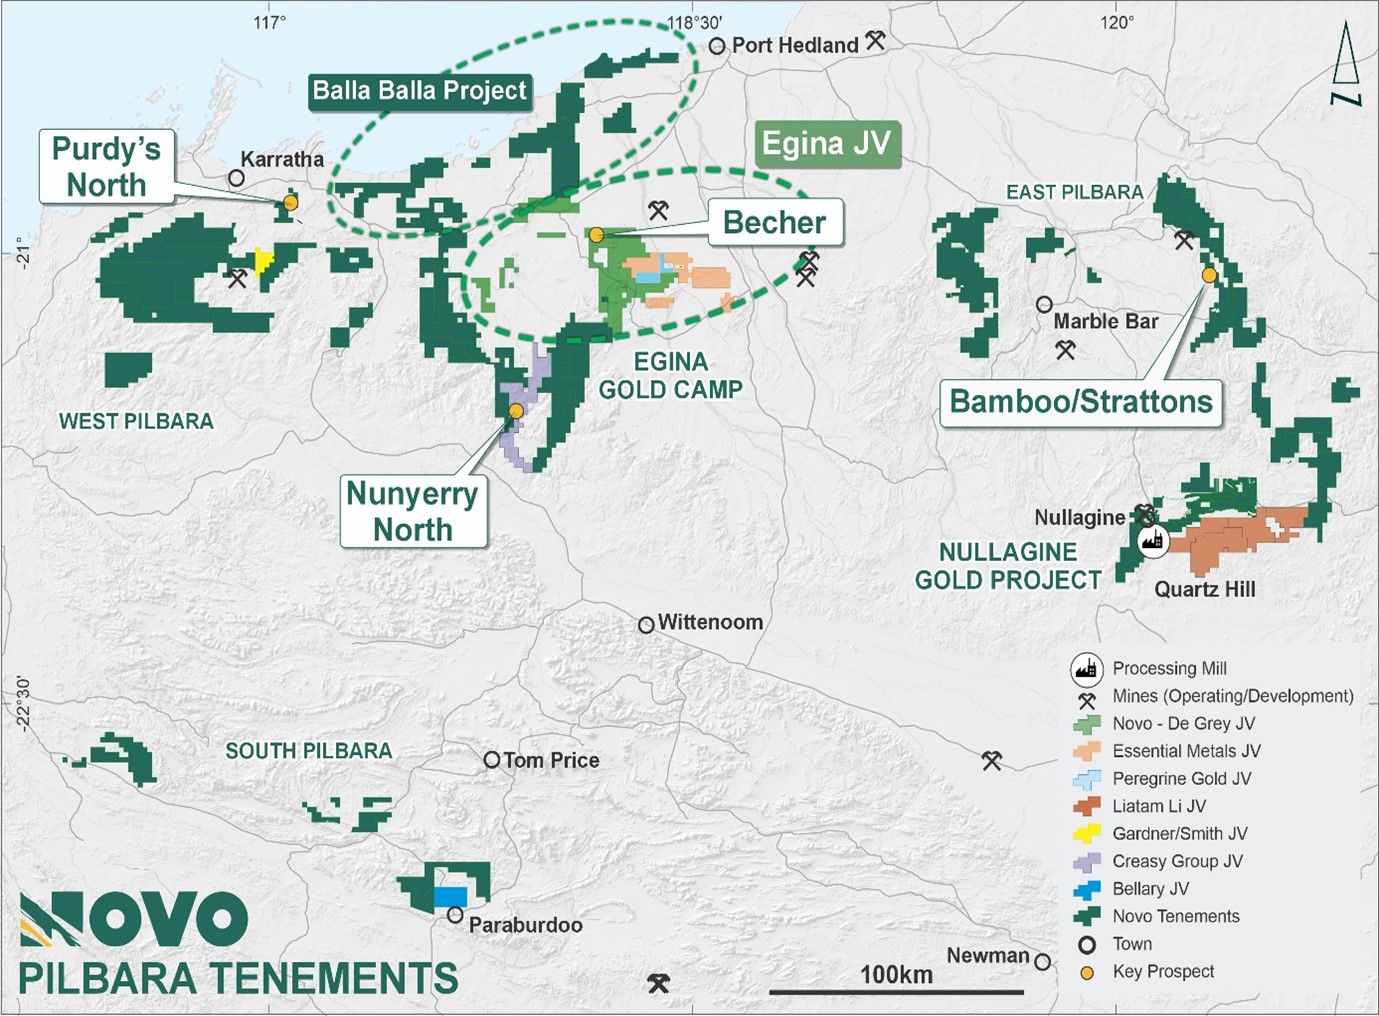 Novo Resources property map